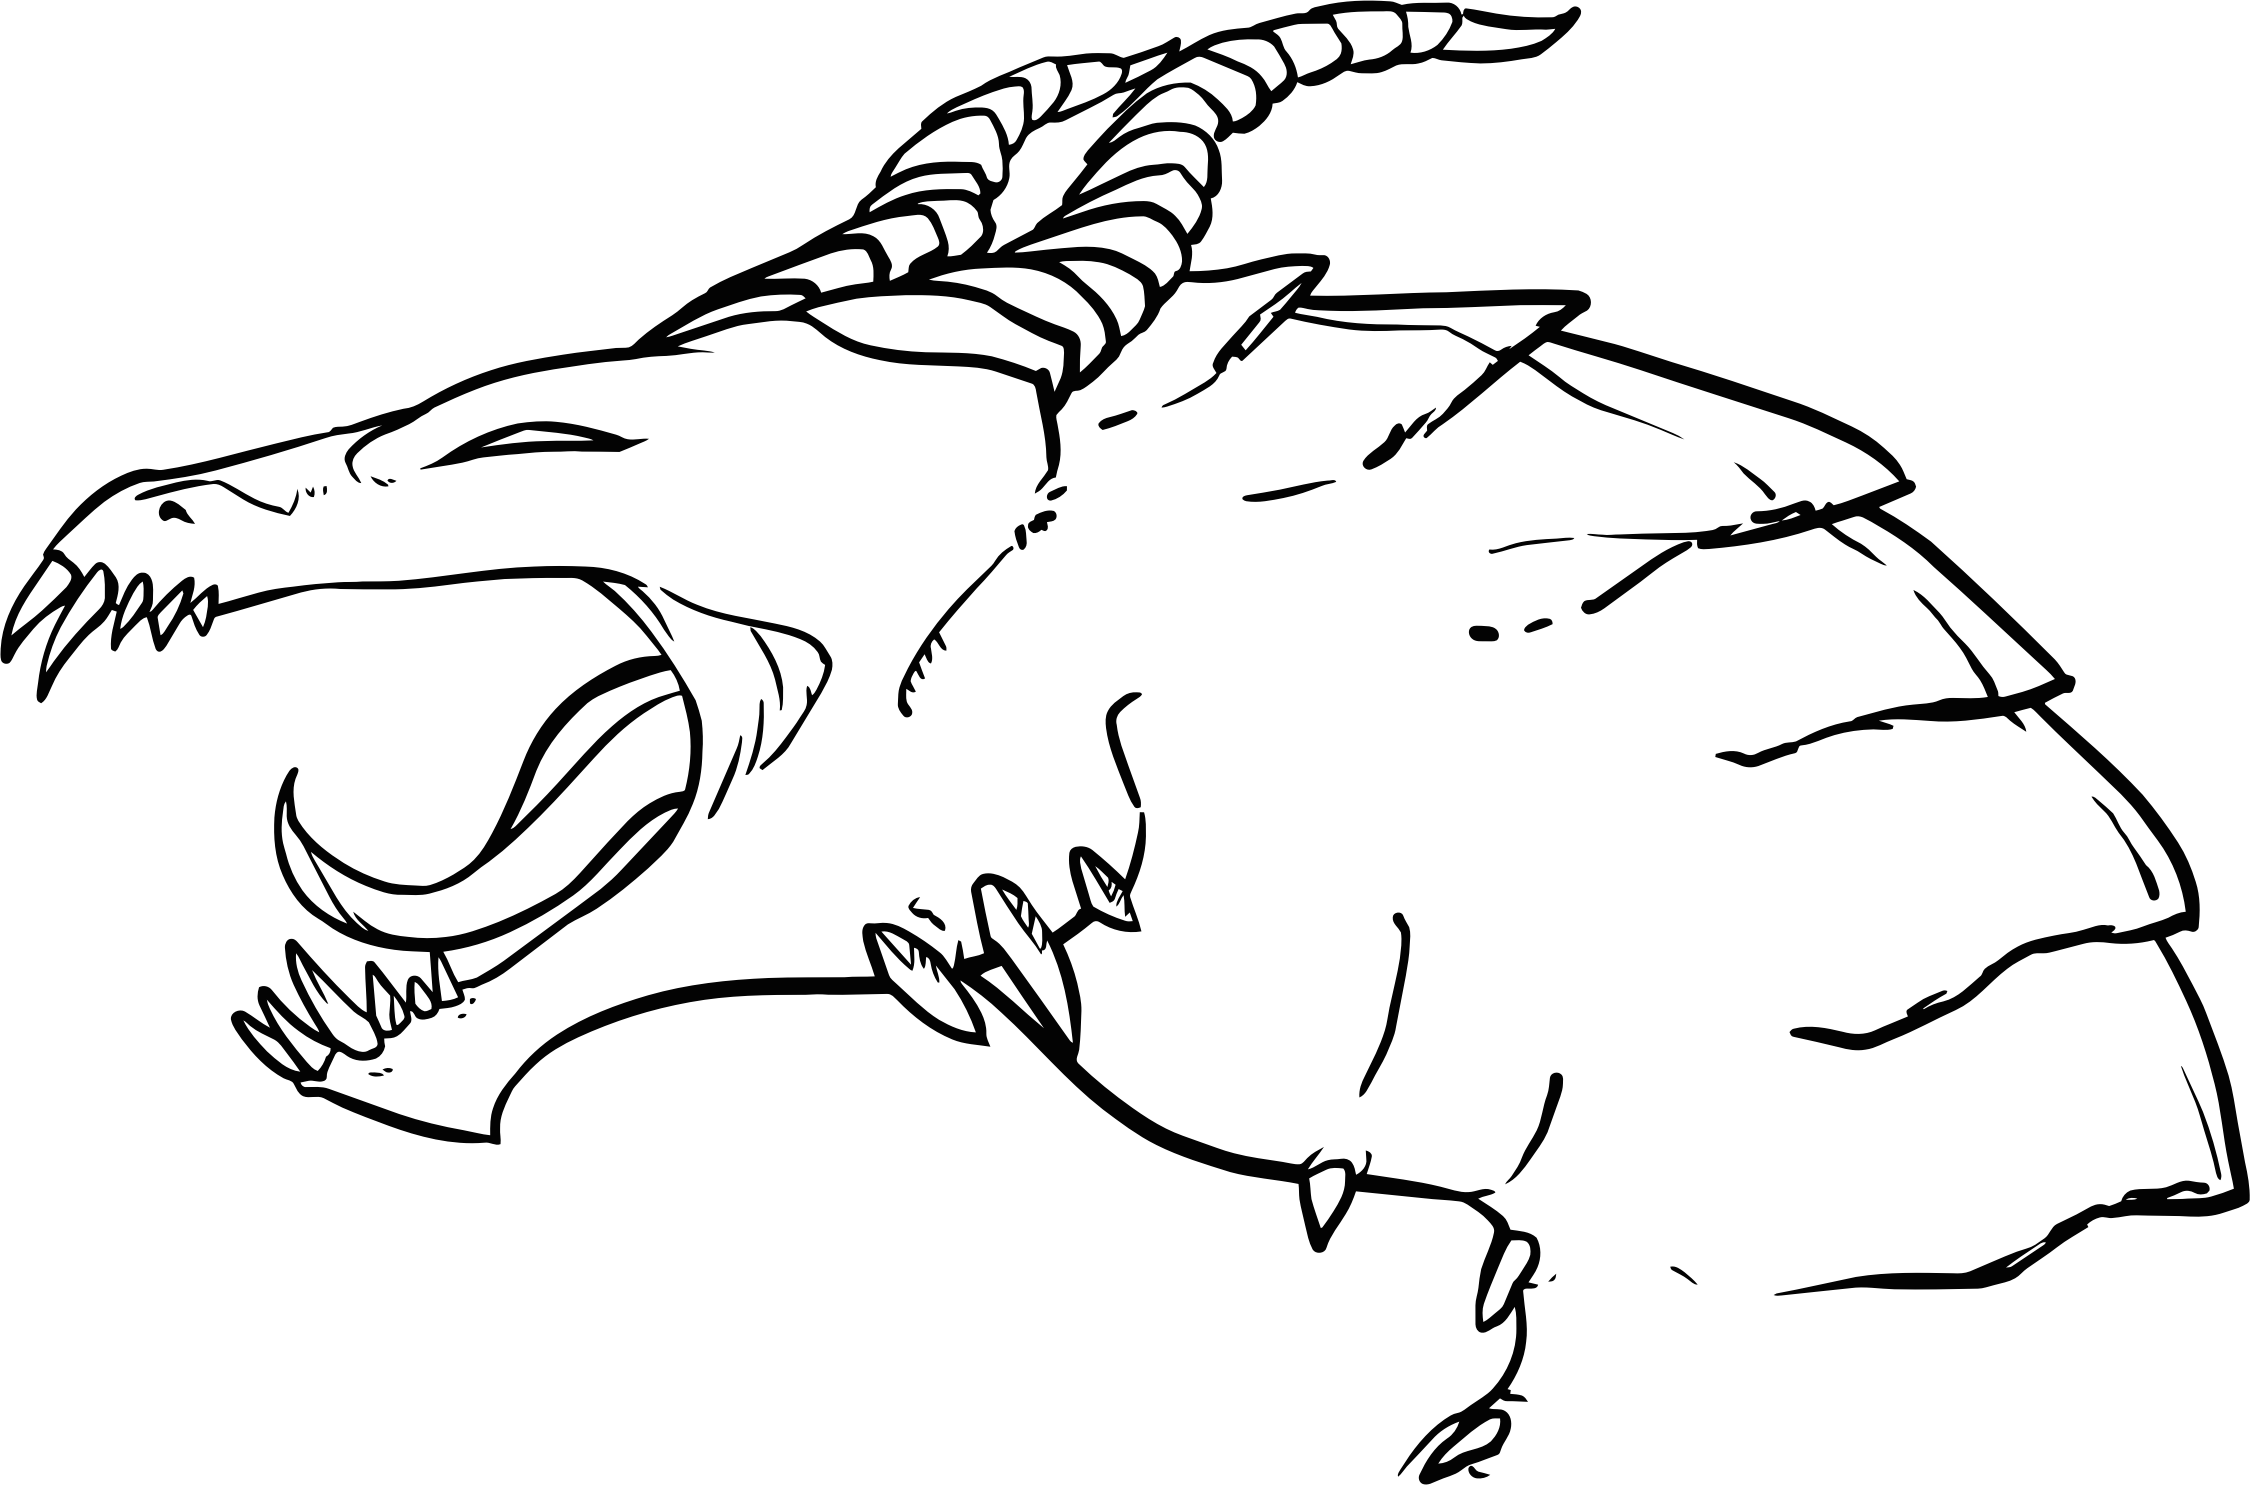 Dragon line drawing